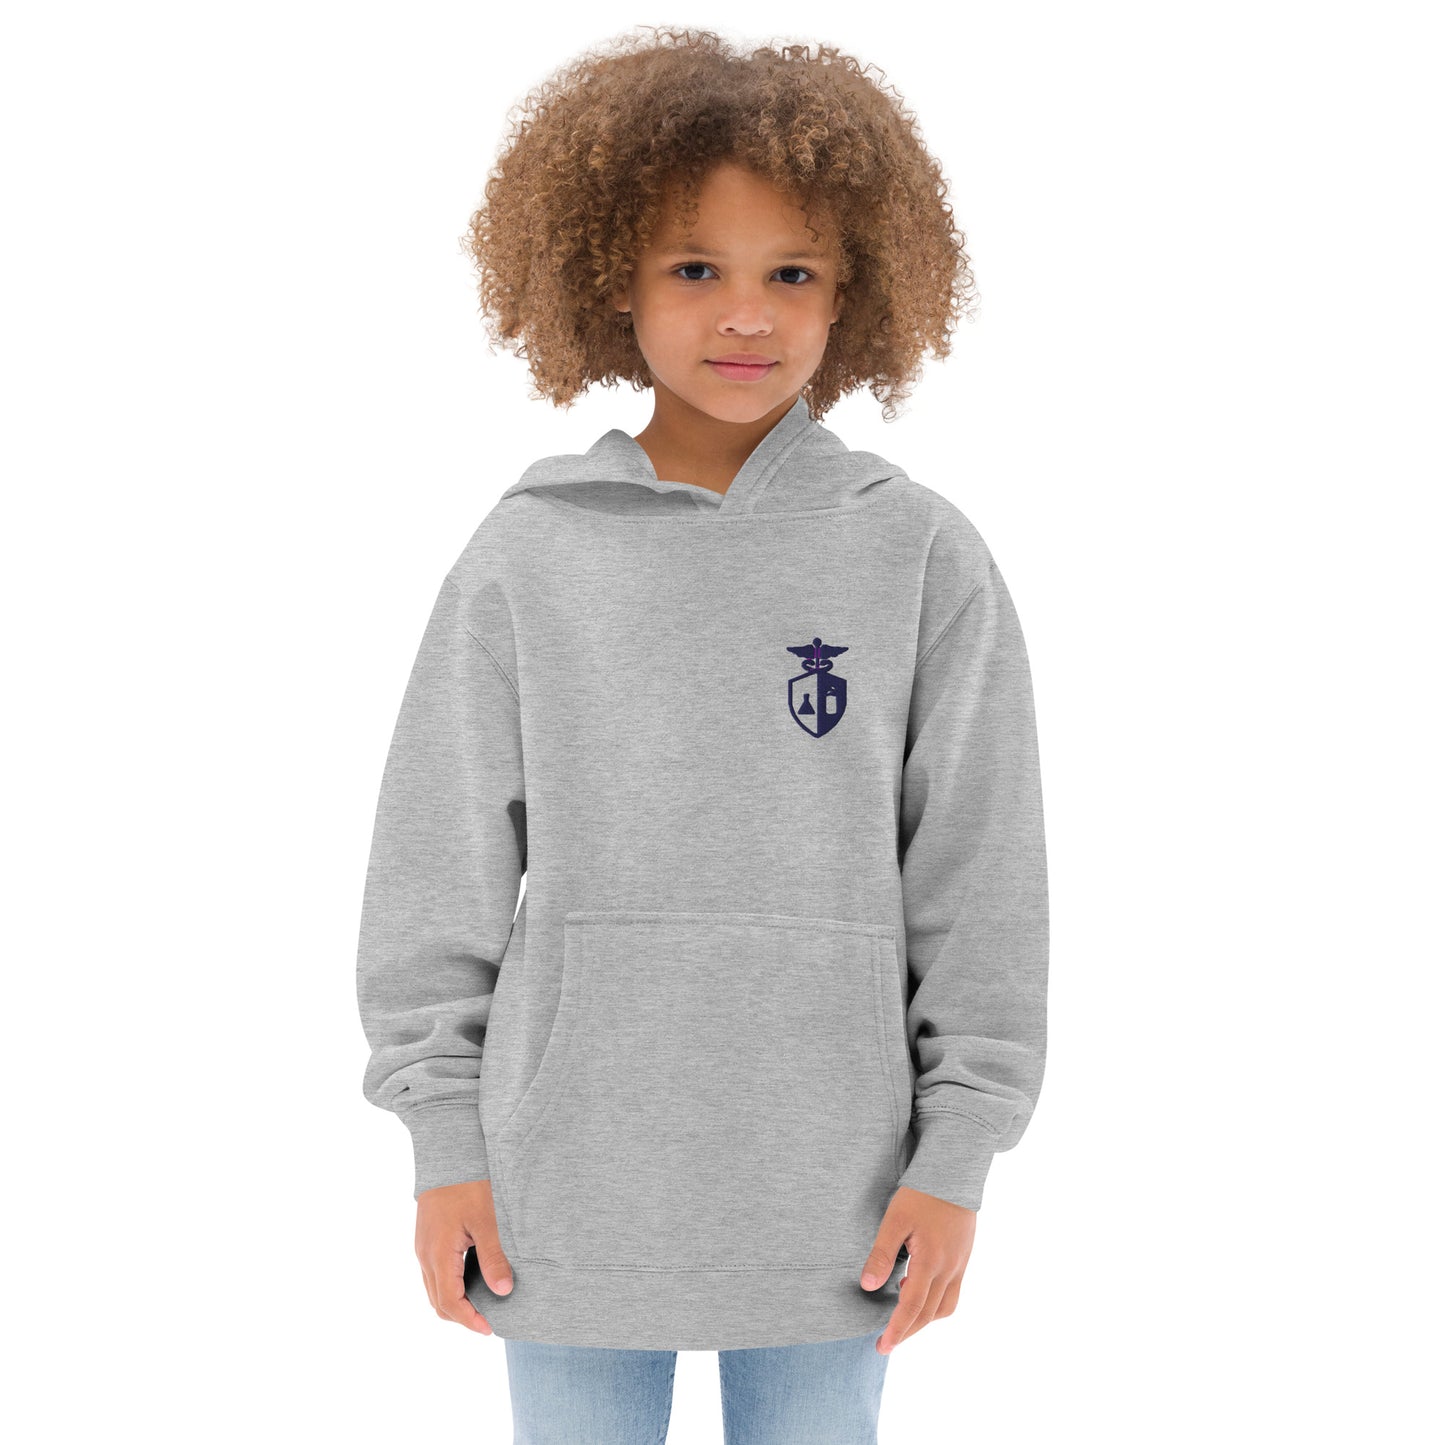 Kids fleece hoodie - Innovation Compounding